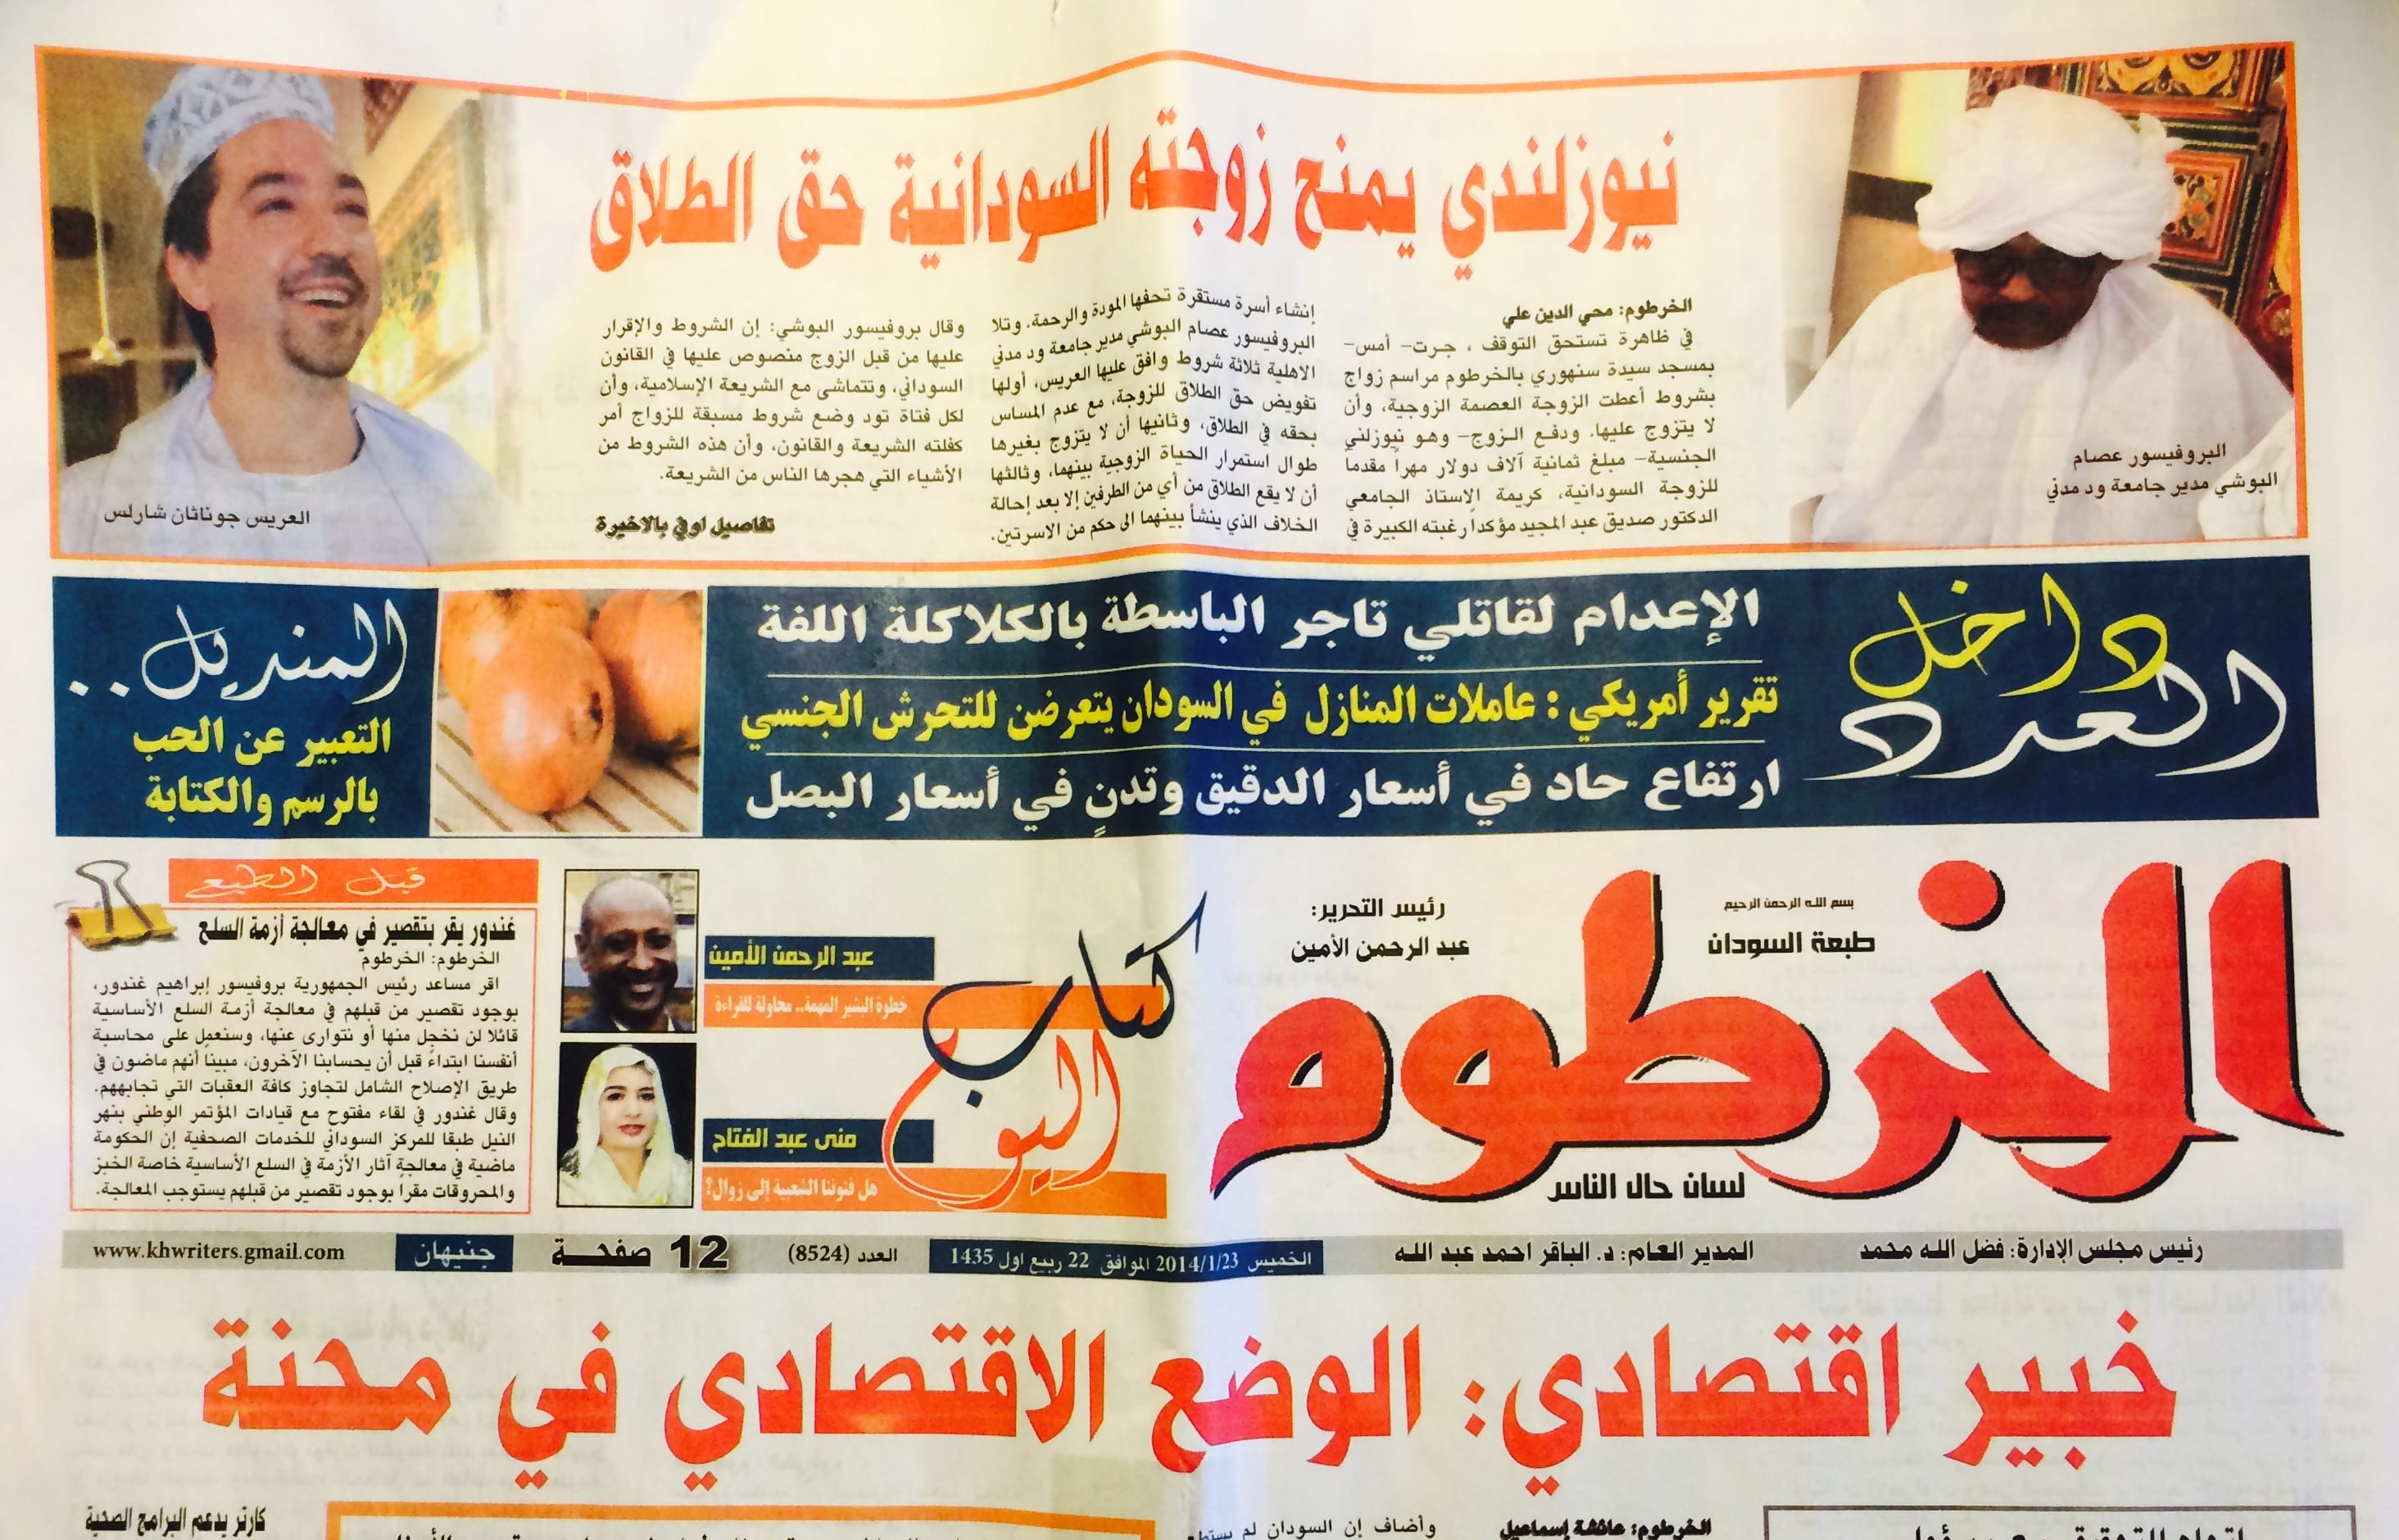 Jon Toogood's marriage made headlines in the Khartoum newspapers